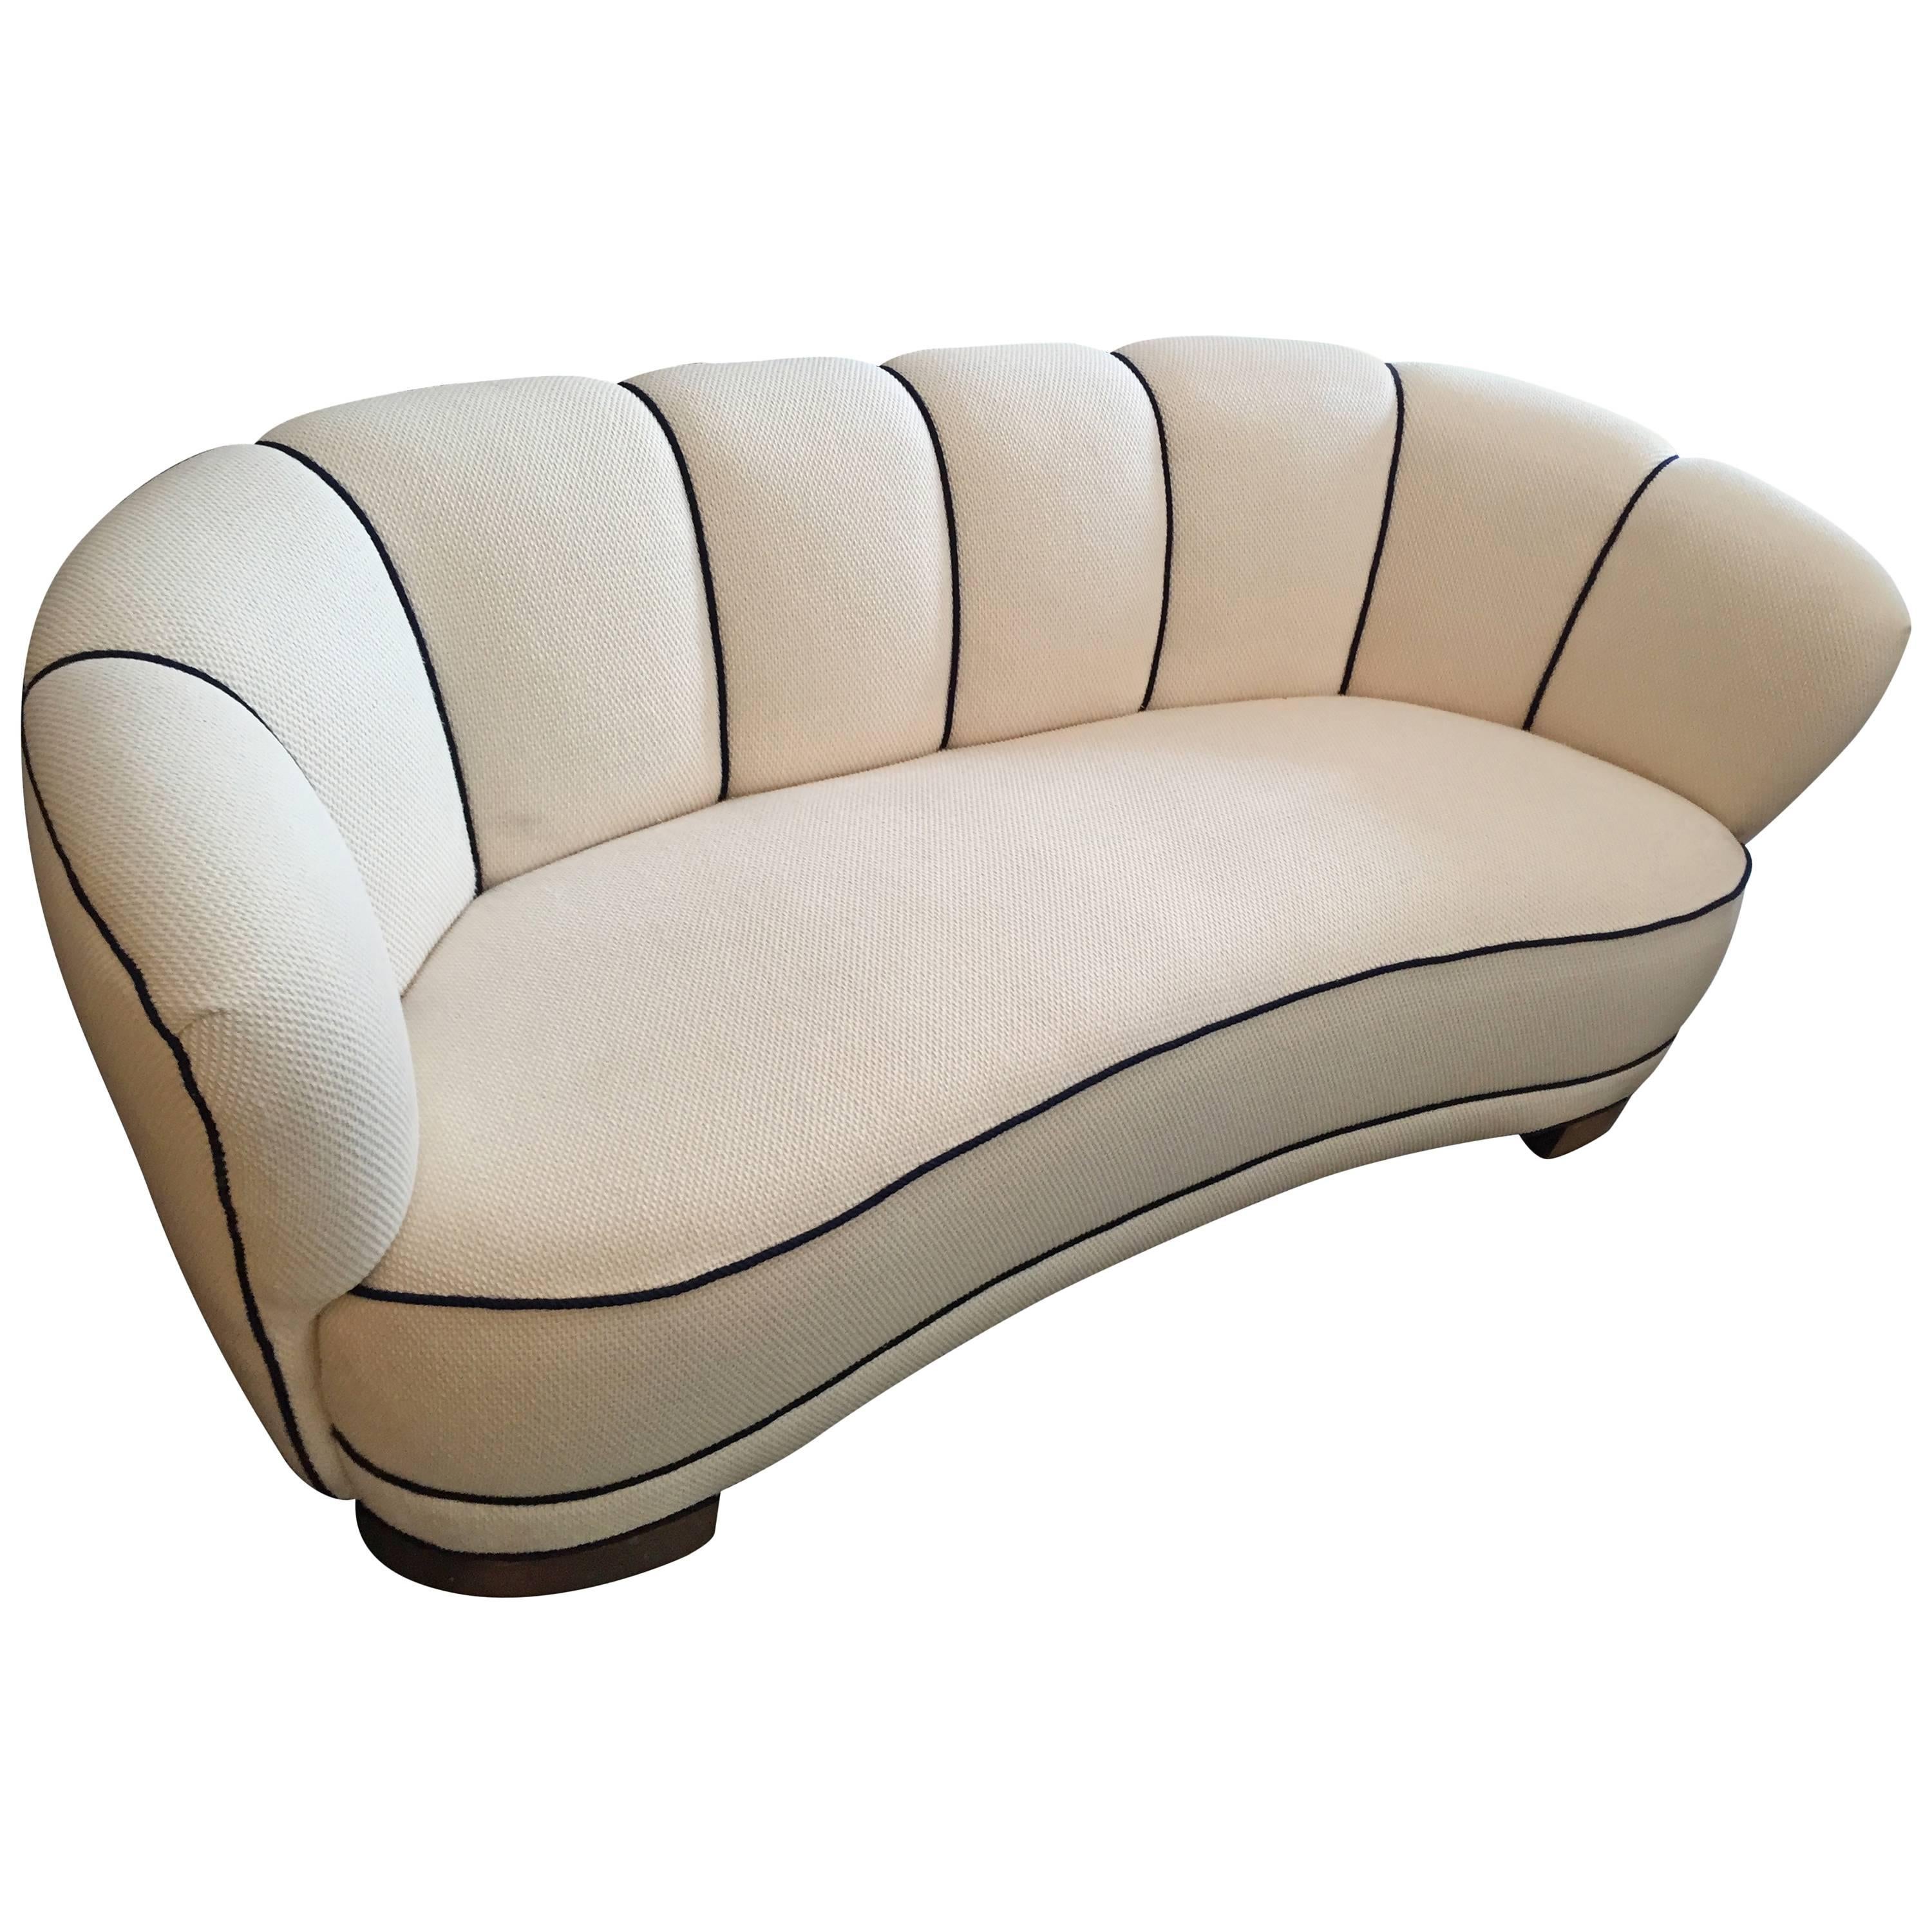 Swedish Art Deco Sofa